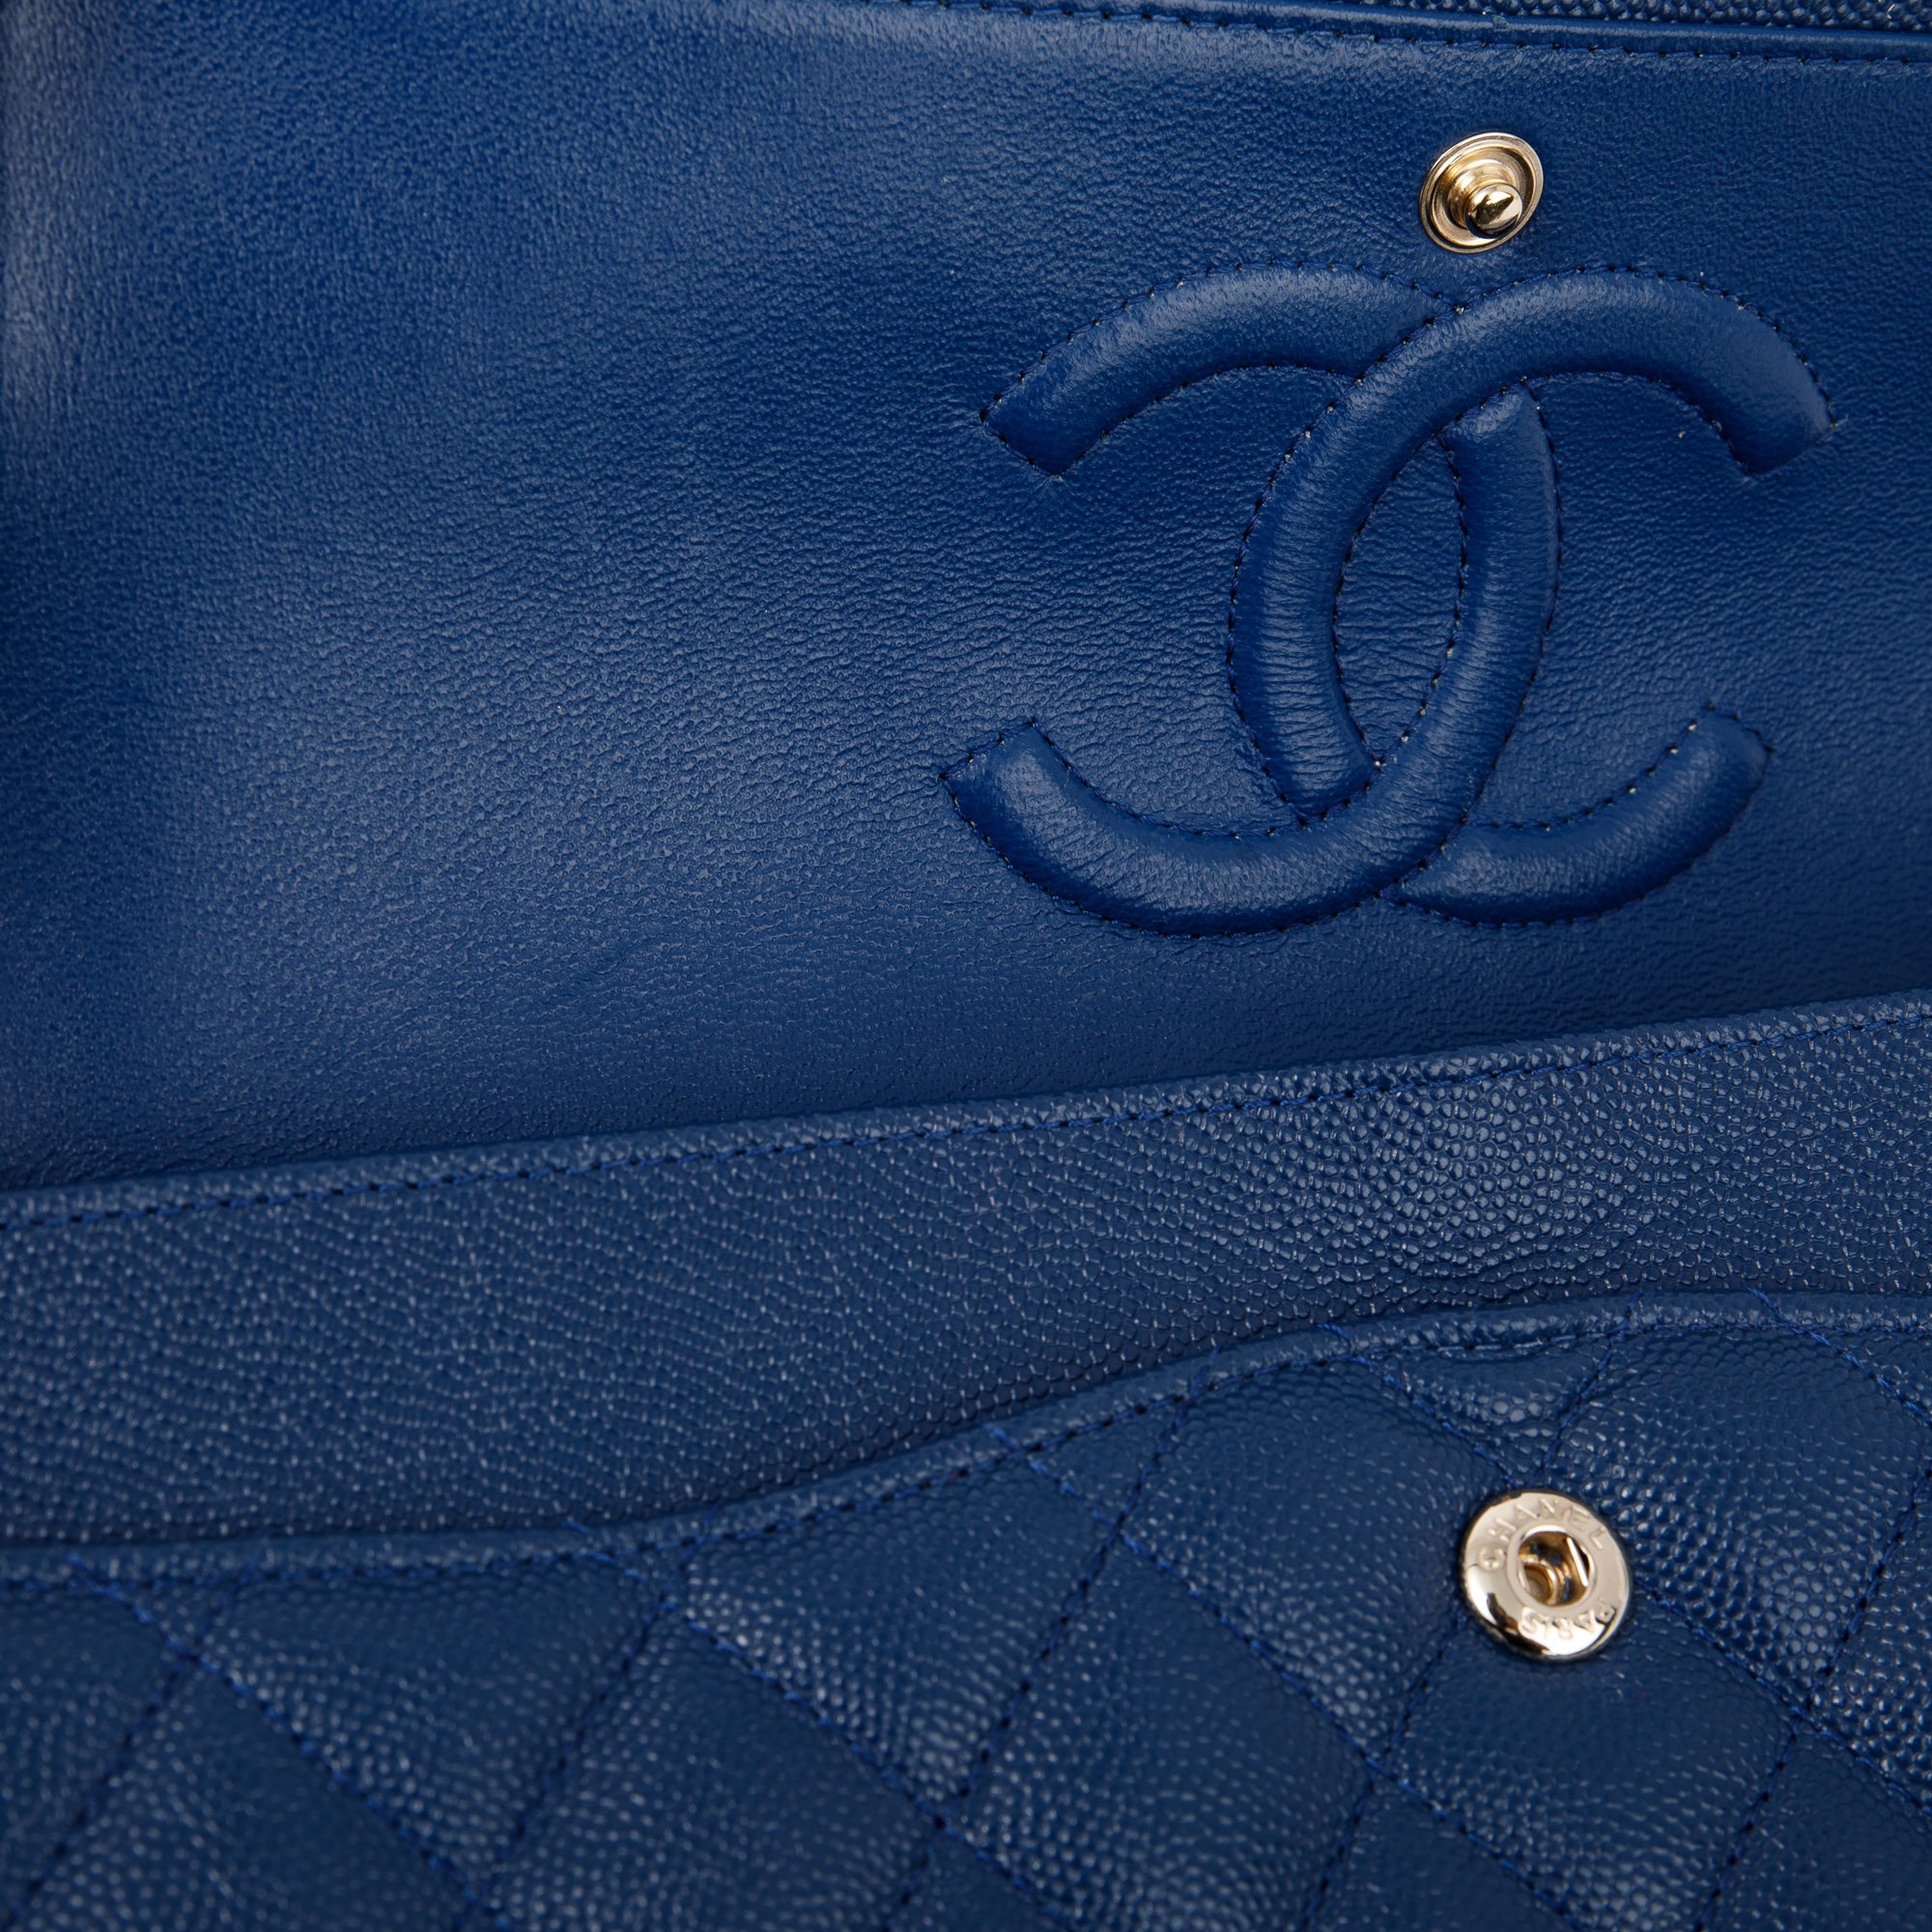 Chanel Navy Blue Jumbo Caviar Classic Double Flap Bag SHW